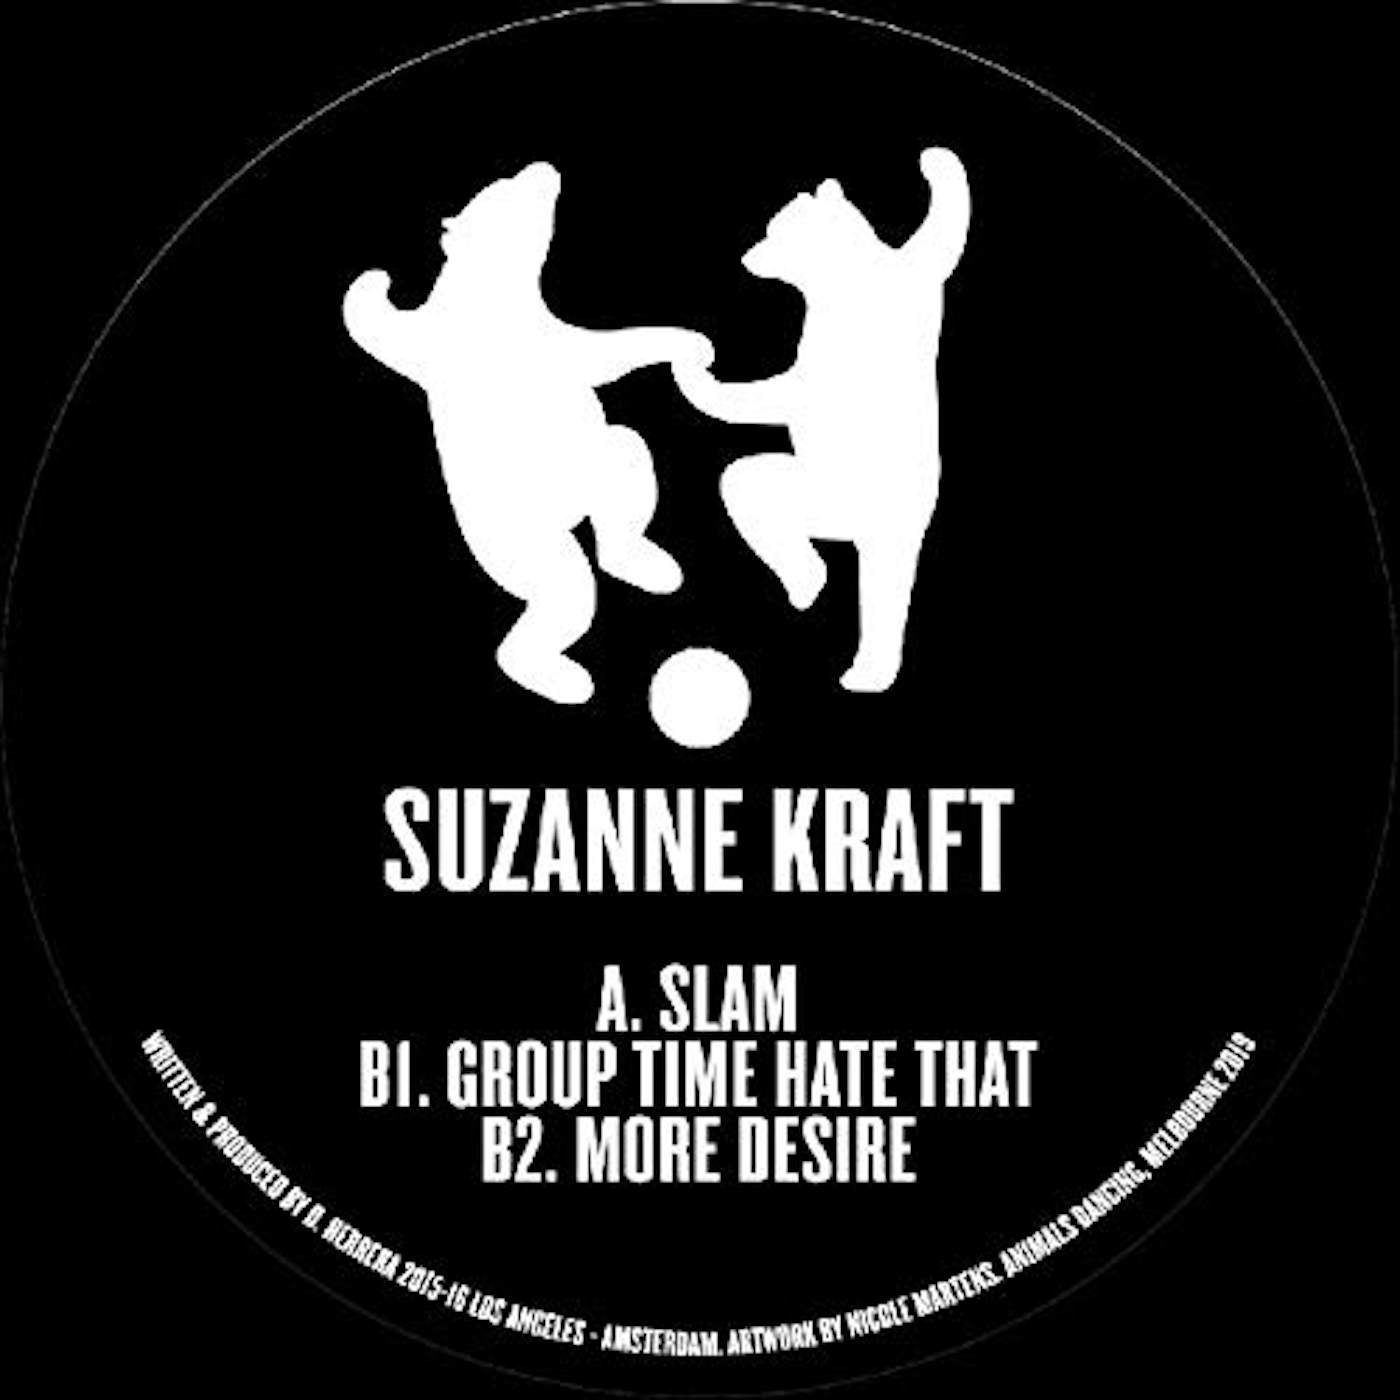 Suzanne Kraft Slam Vinyl Record